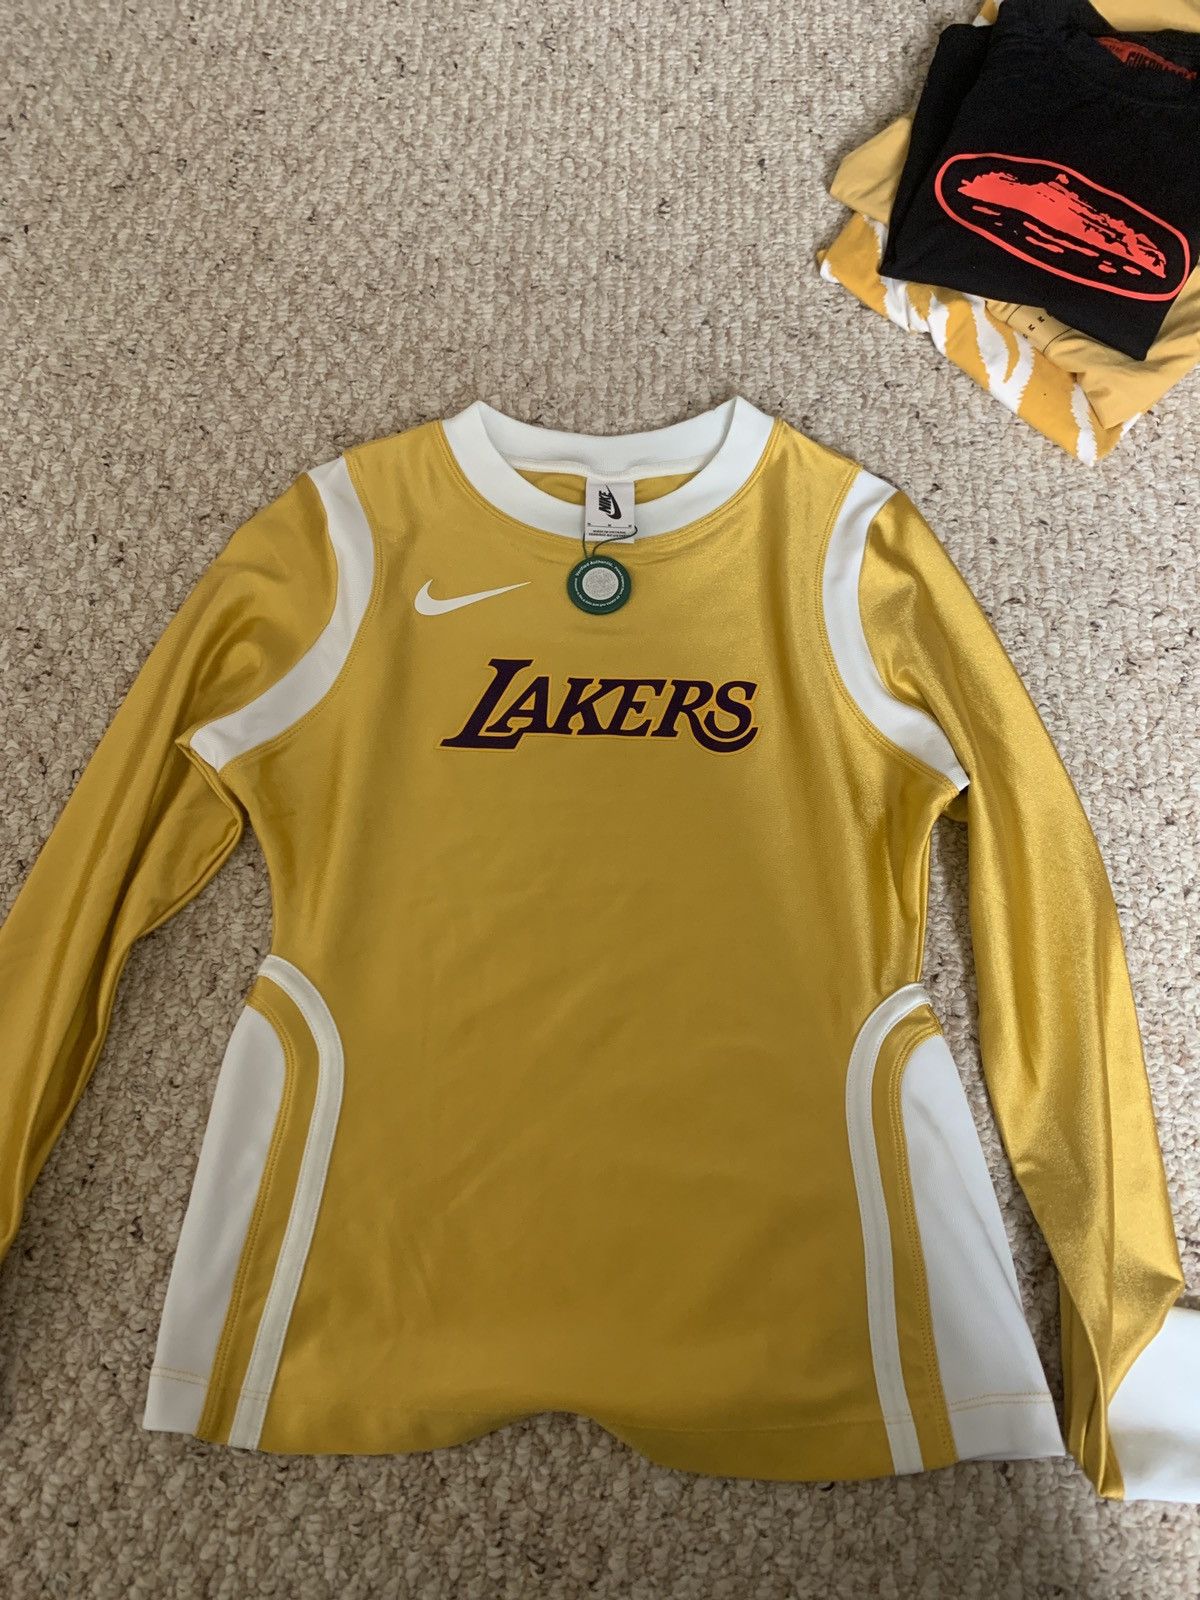 Nike Lakers Nike Ambush Design Jersey | Grailed